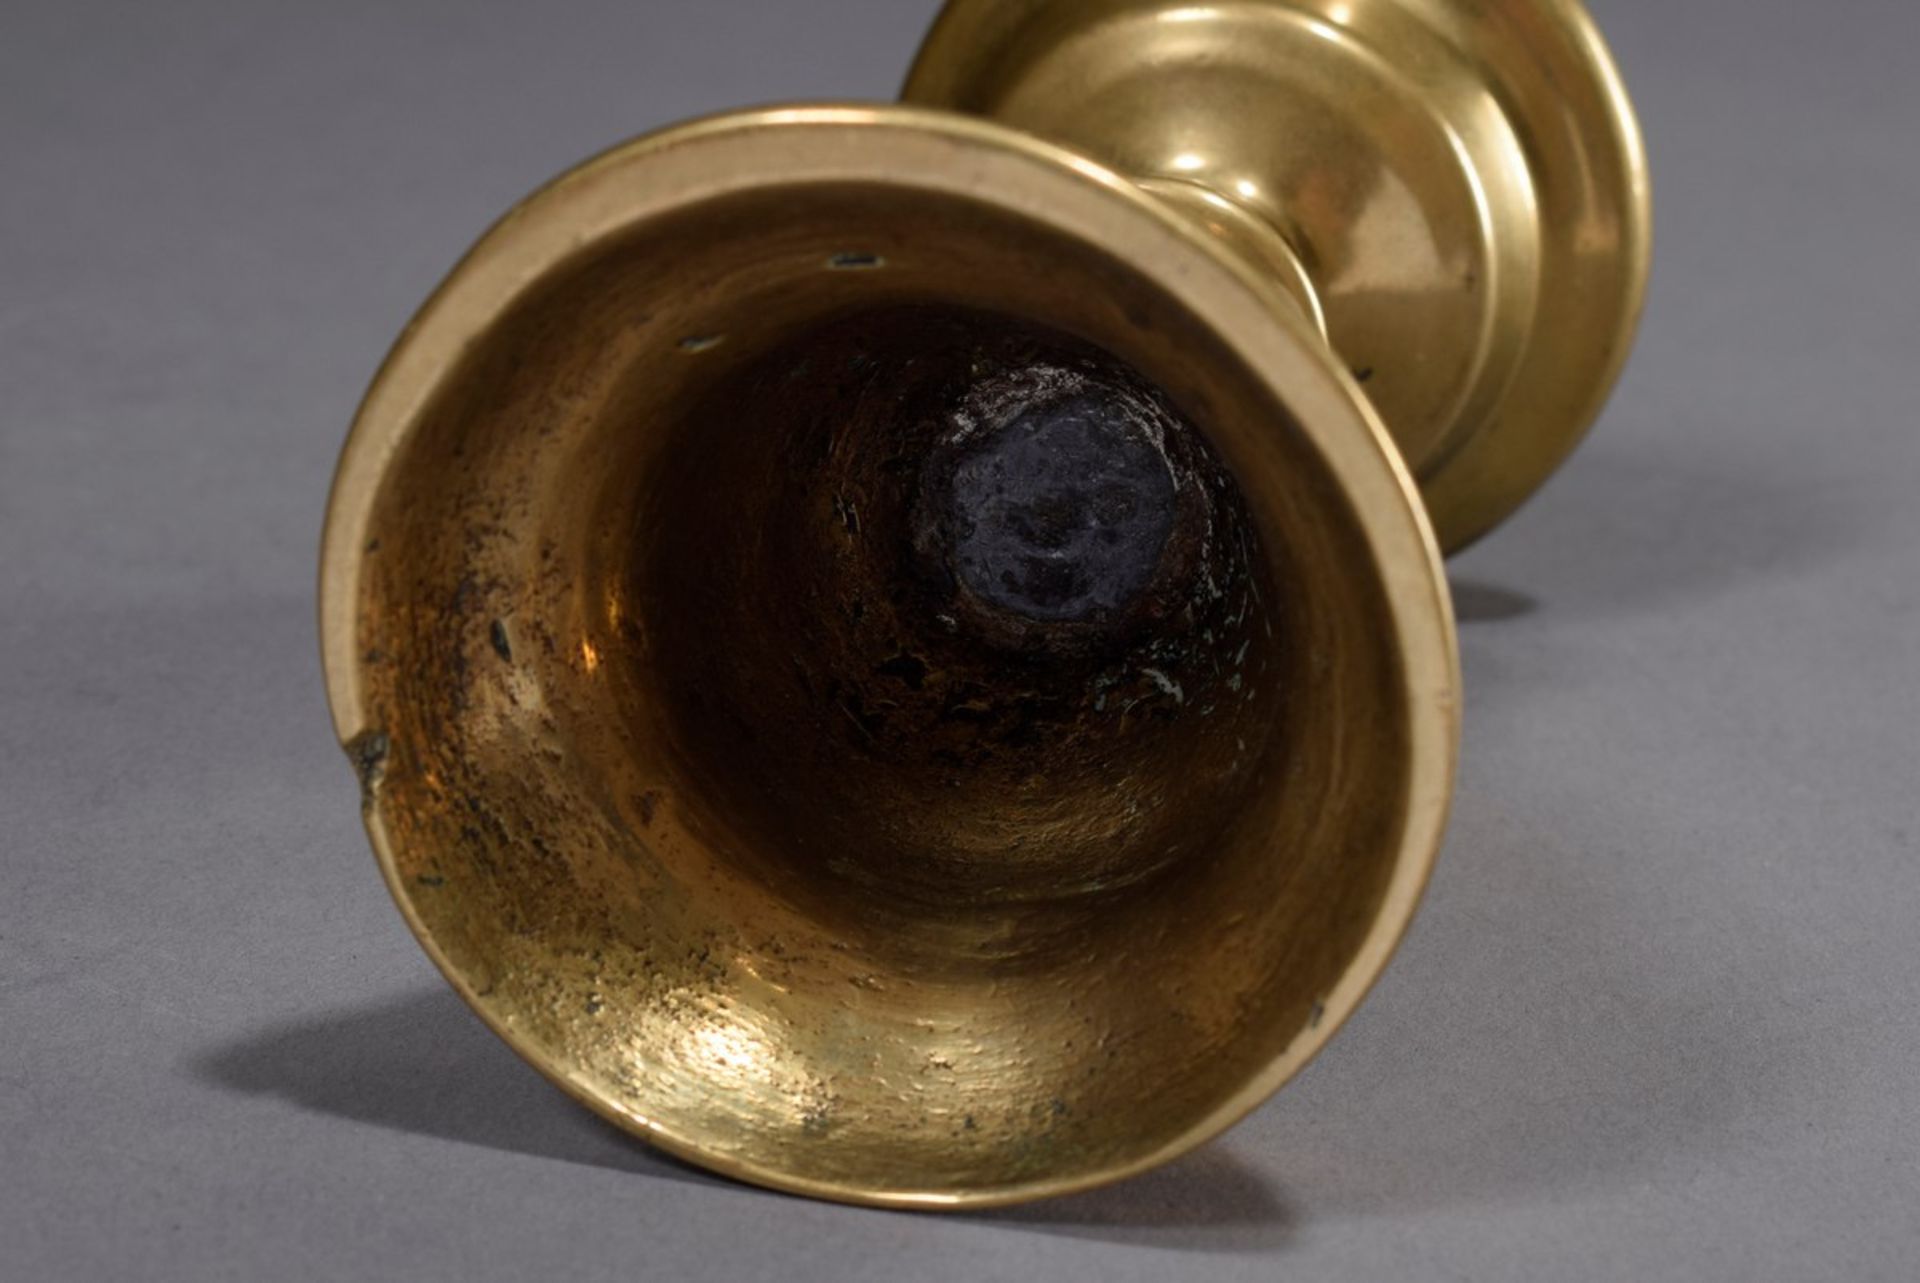 Antiker Gelbguss Leuchter mit abgetreppten Wülst | Antique brass candlestick with stepped beads and - Image 3 of 3